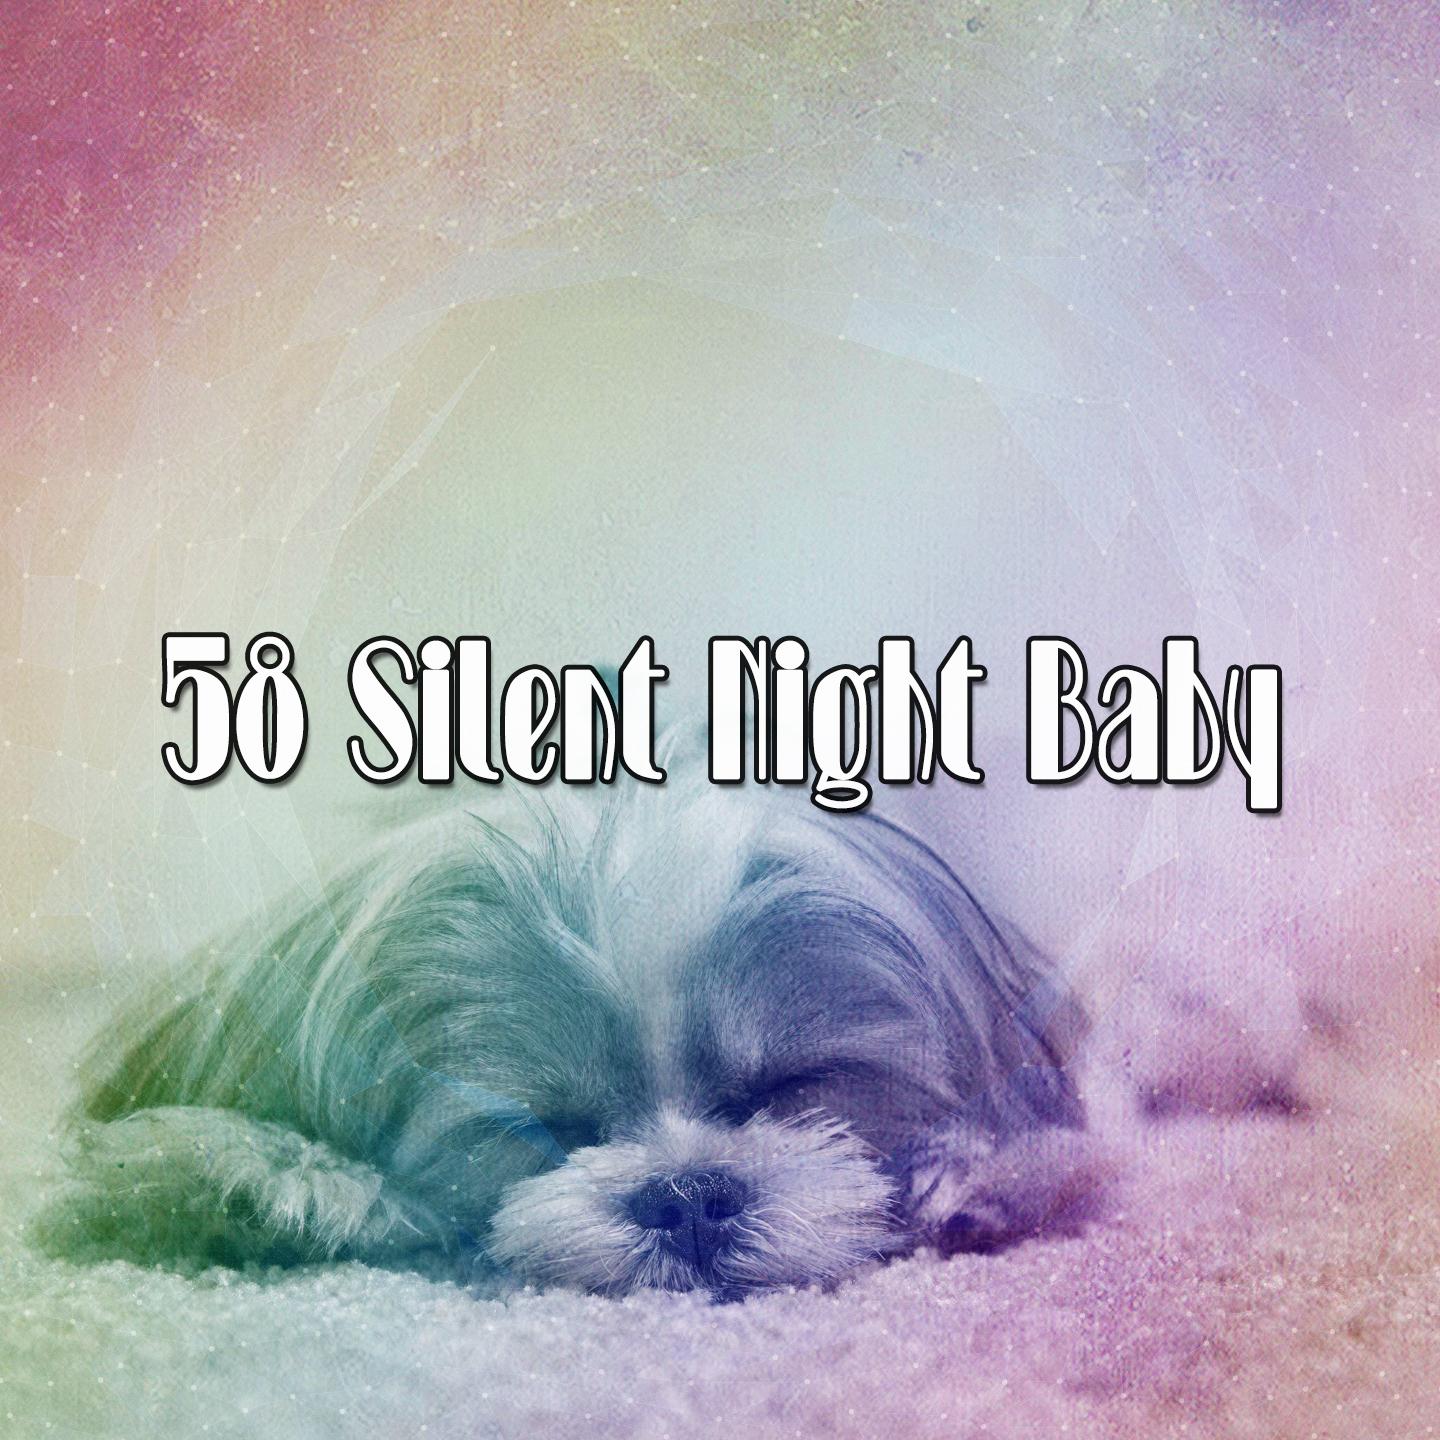 58 Silent Night Baby